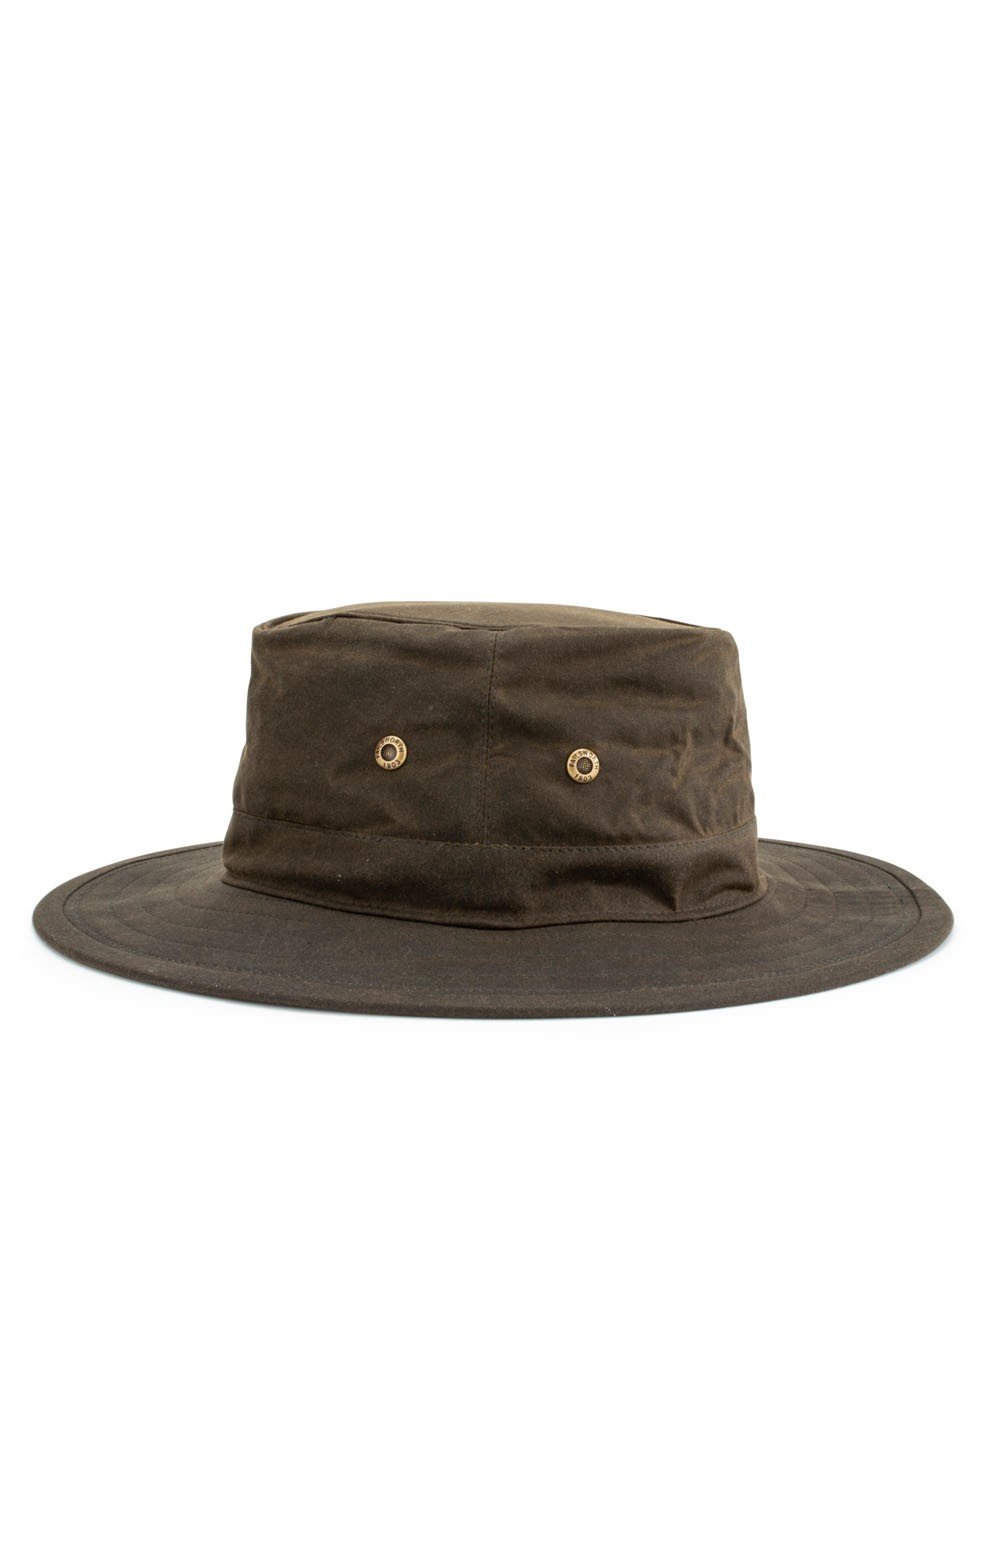  Men's Failsworth Wax Traveller Hat, Brown